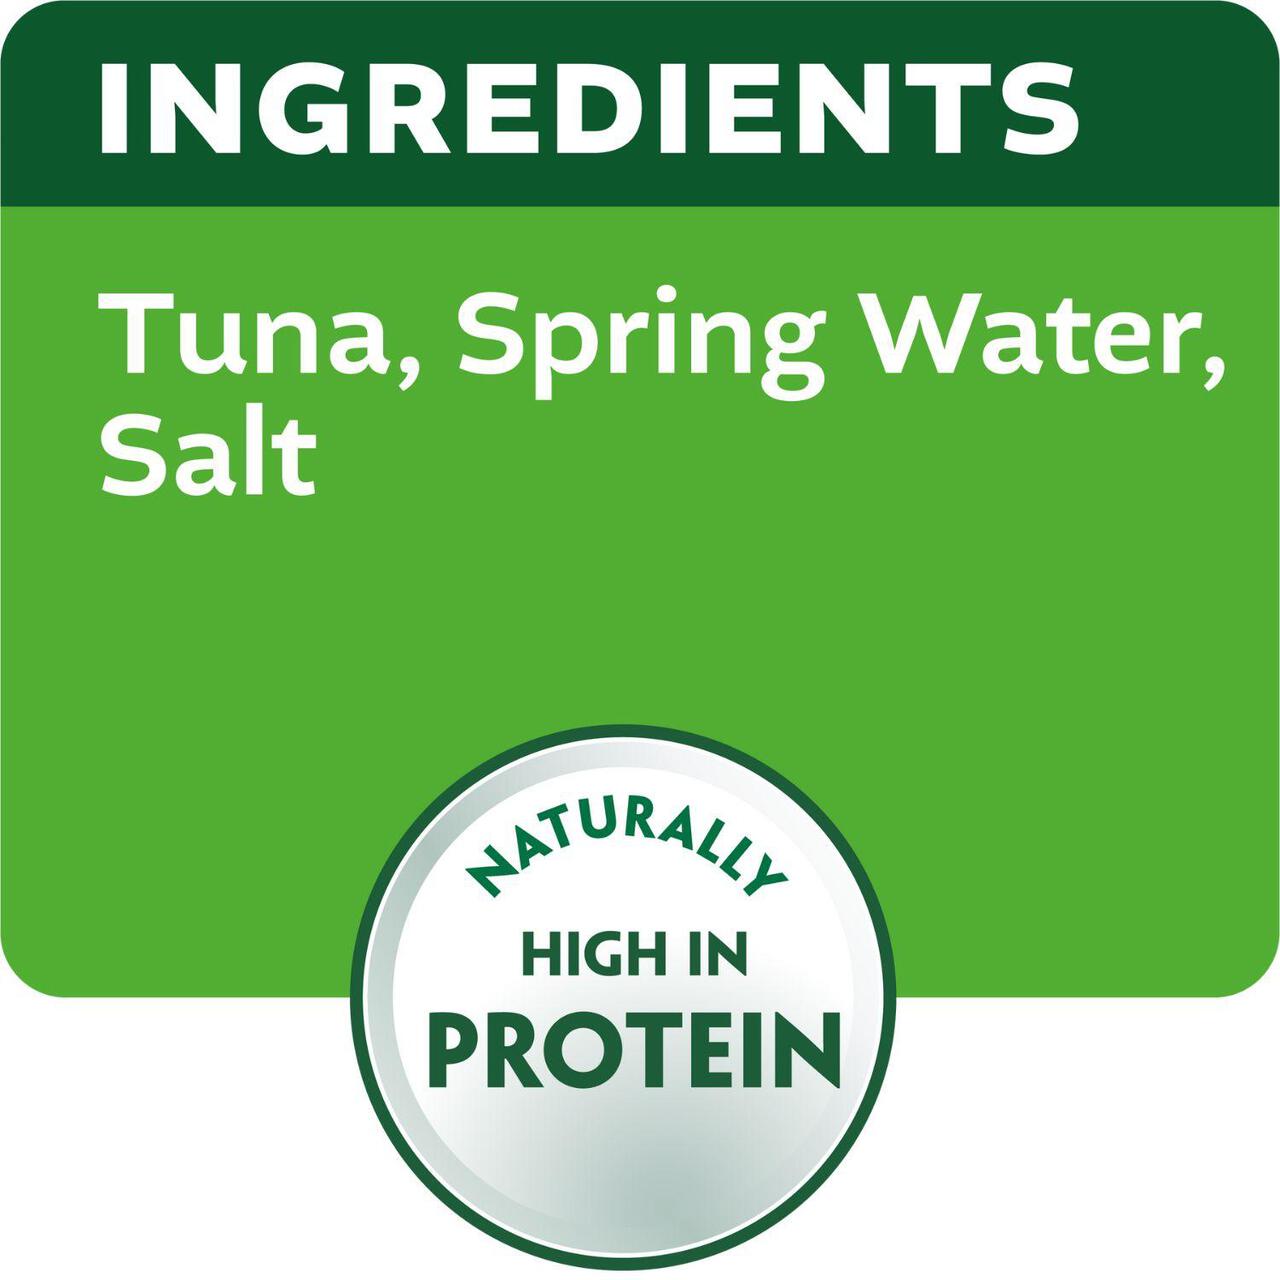 John West Tuna Chunks In Spring Water 4 Pack 4 x 145g